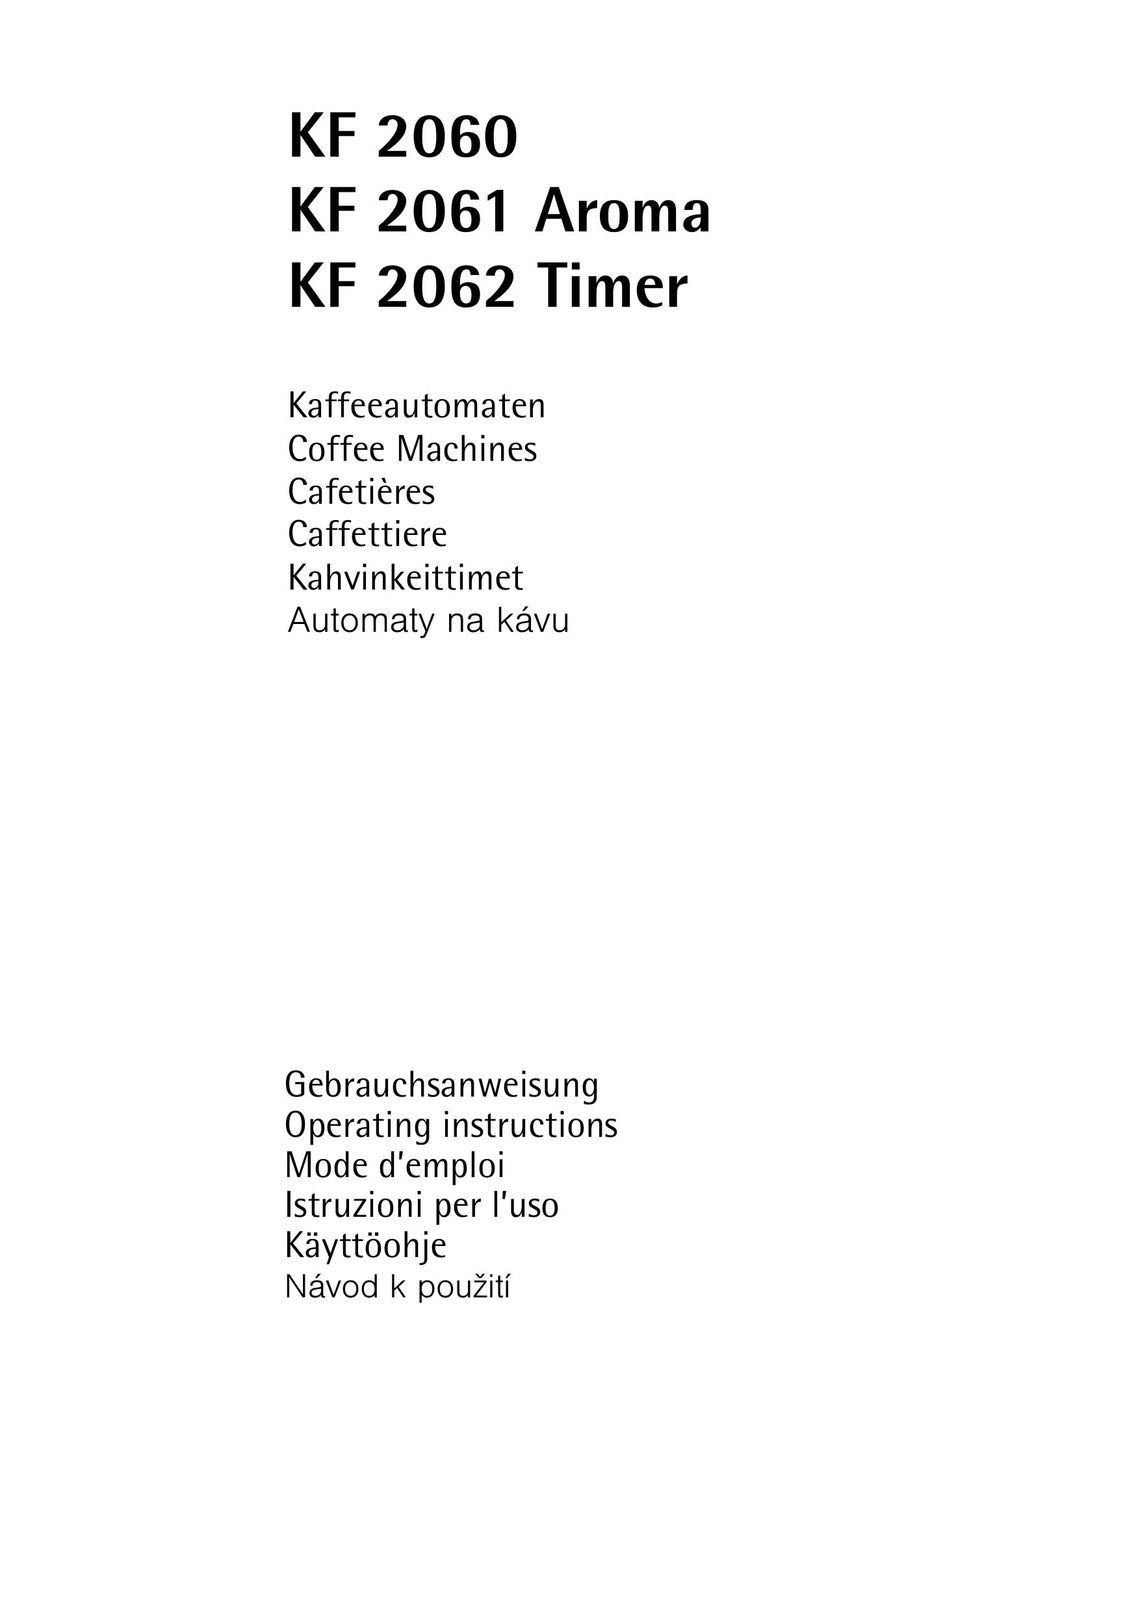 AEG KF 2062 TIMER Coffeemaker User Manual